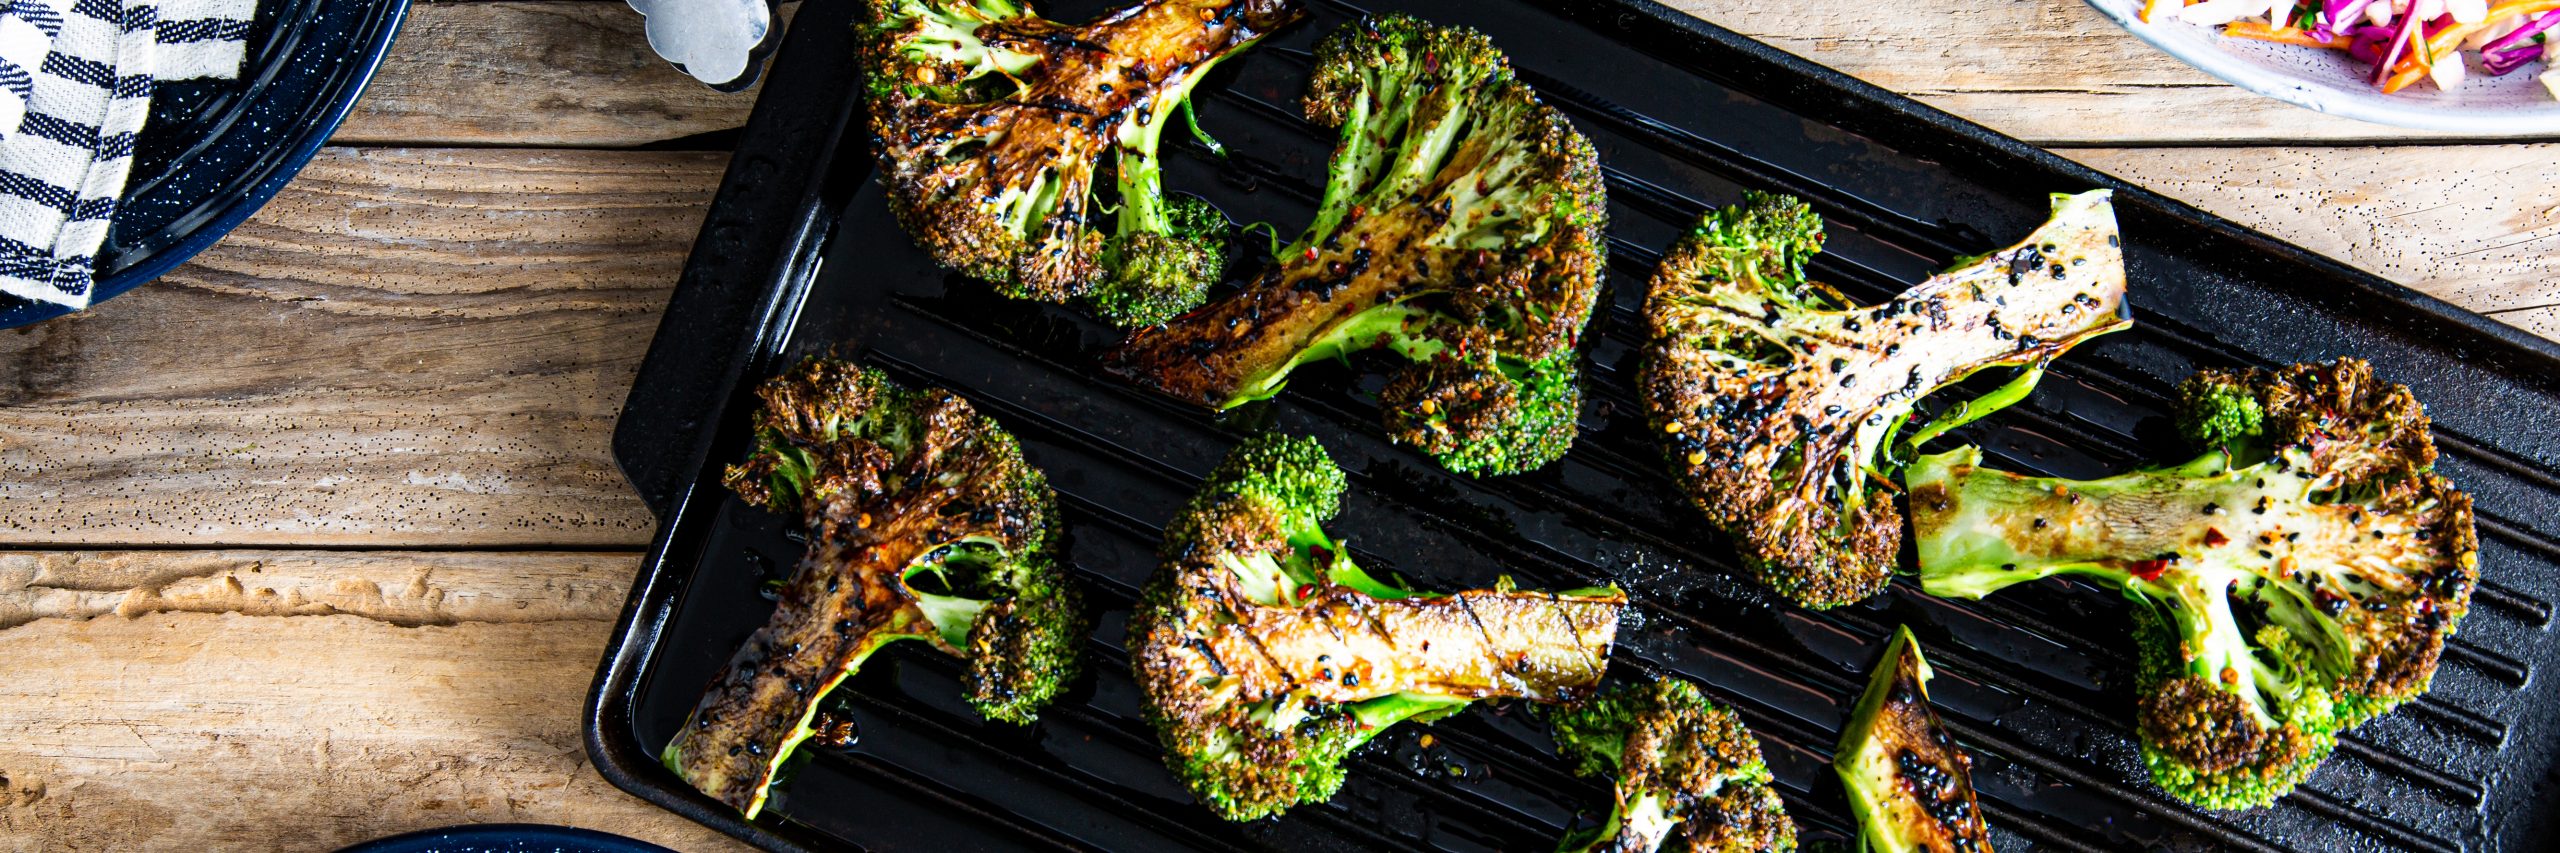 LEADERBRAND Broccoli Steaks RECIPE